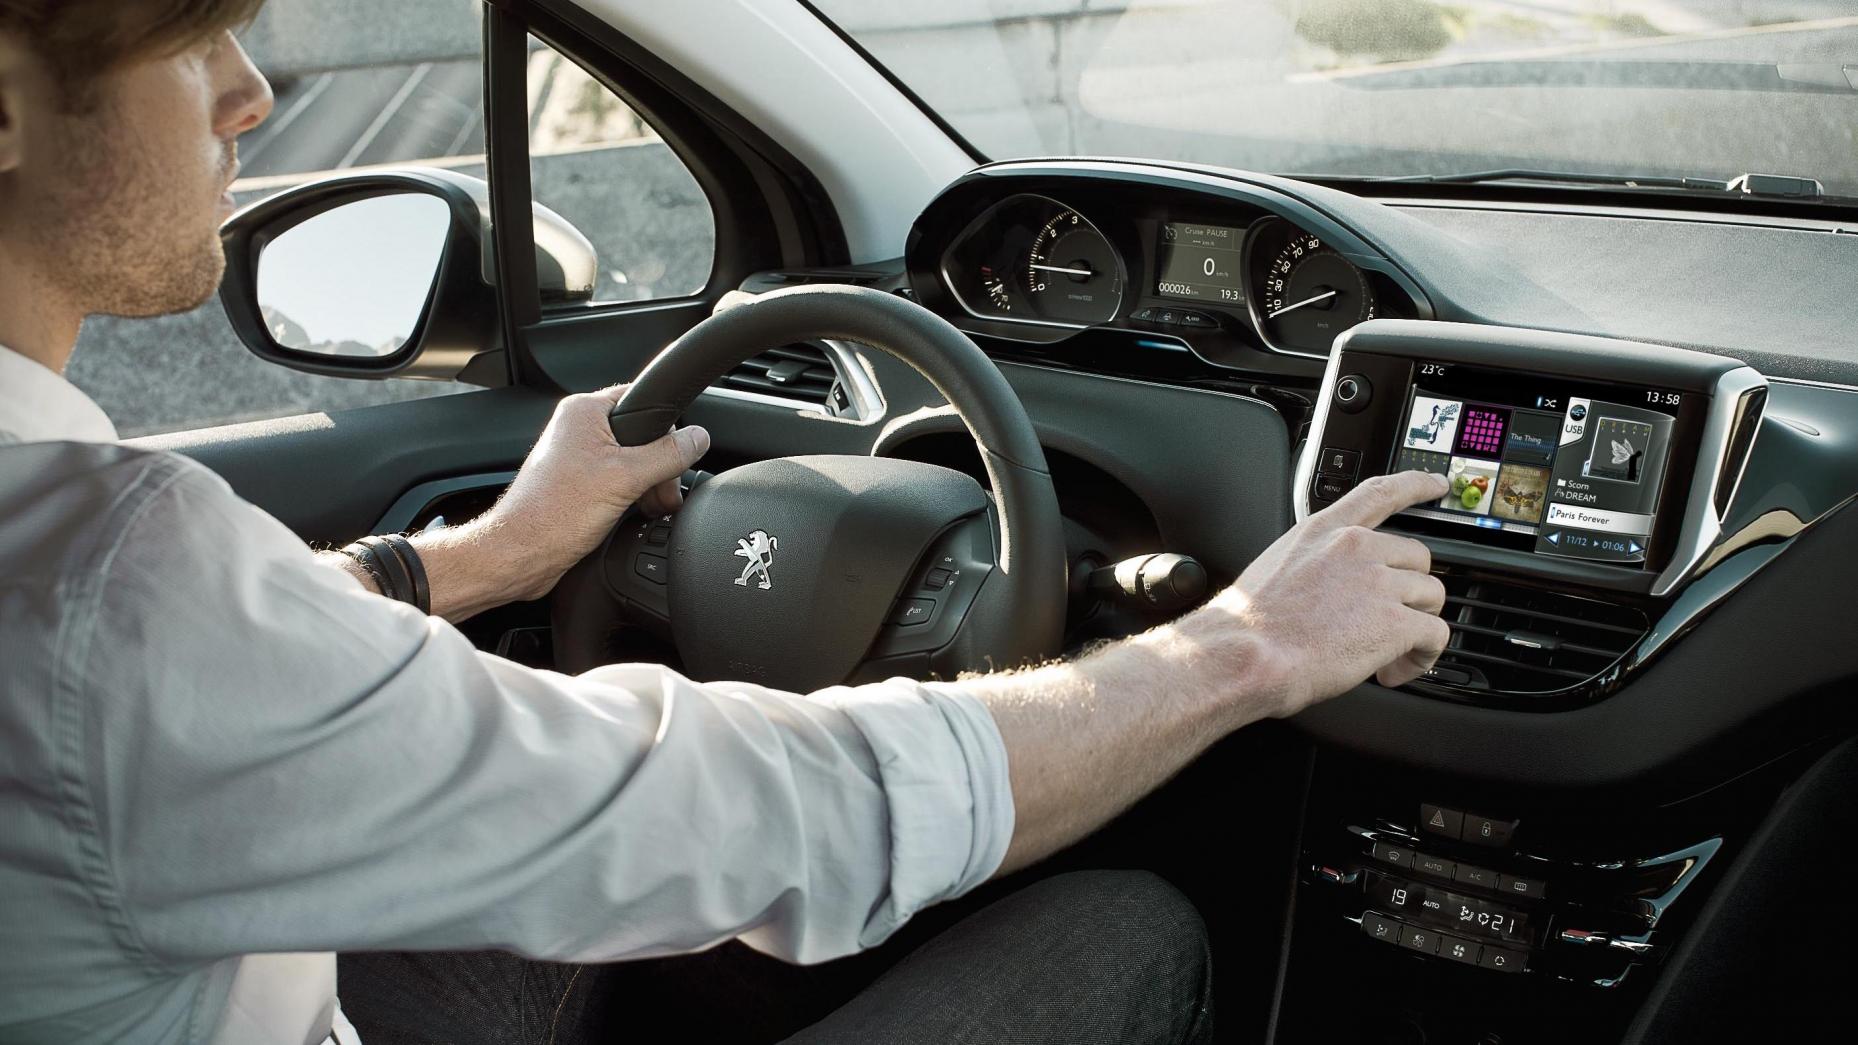 5. Peugeot reinvents the steering wheel (2012)